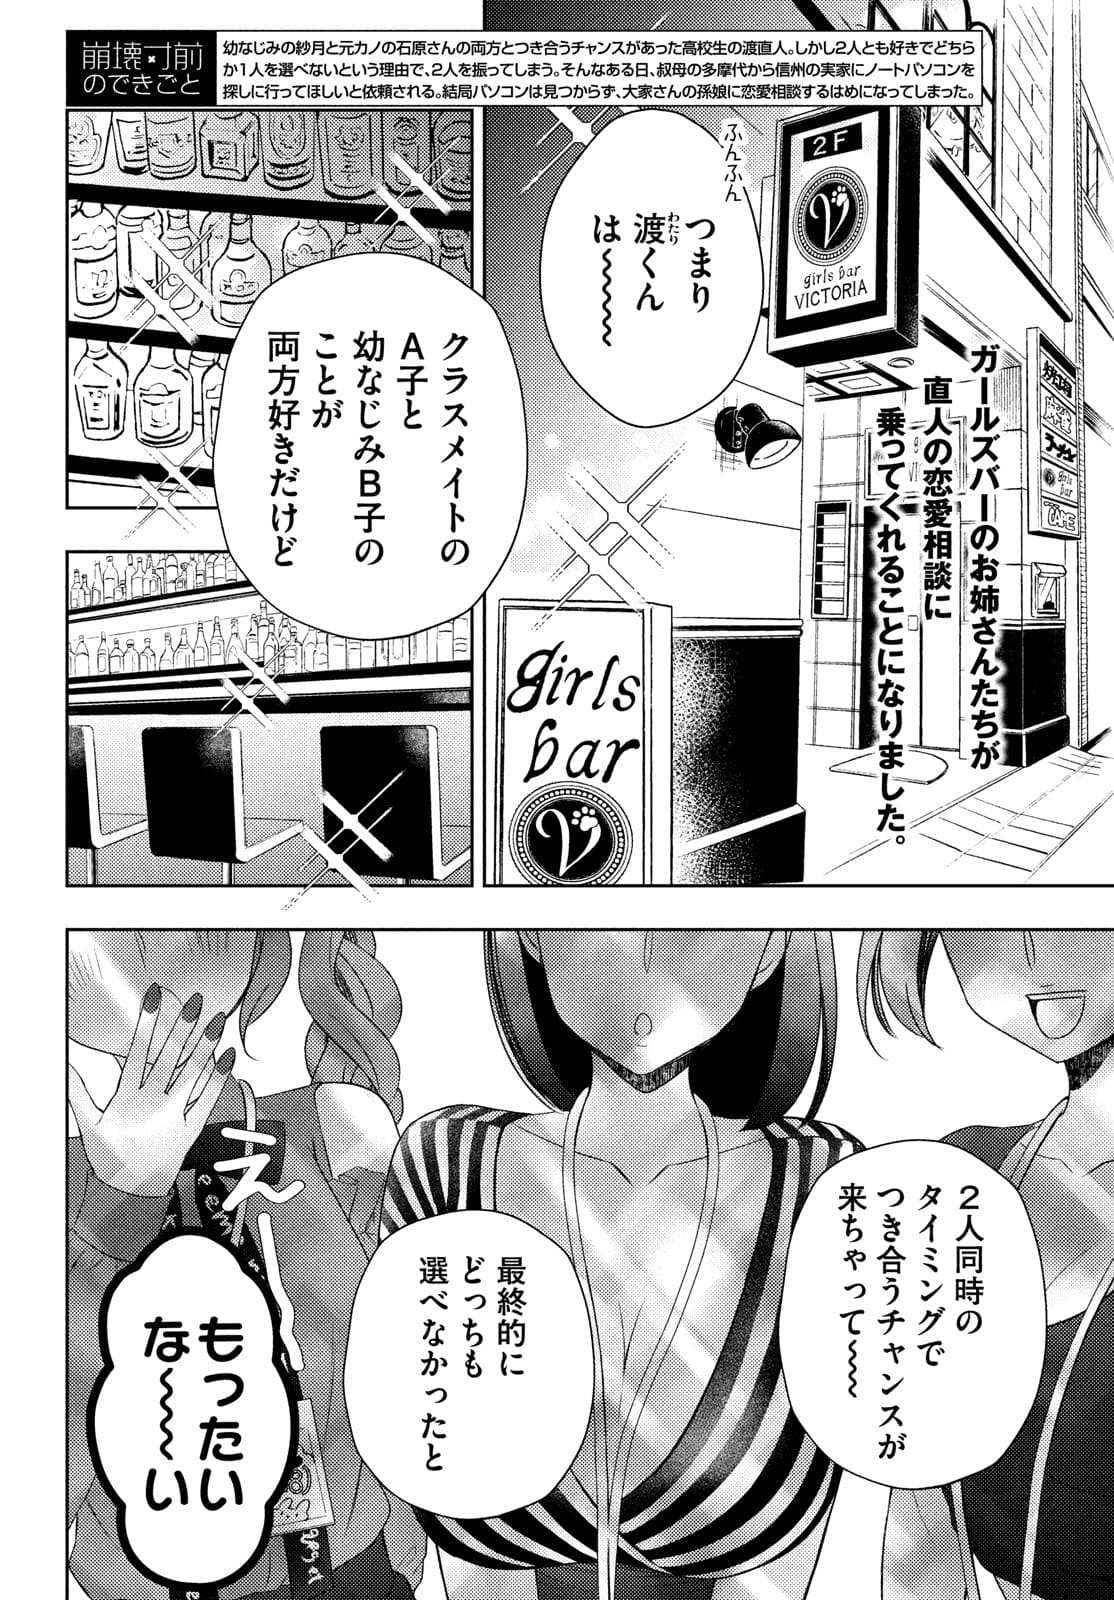 Watari-kun no xx ga Houkai Sunzen - Chapter 63 - Page 2